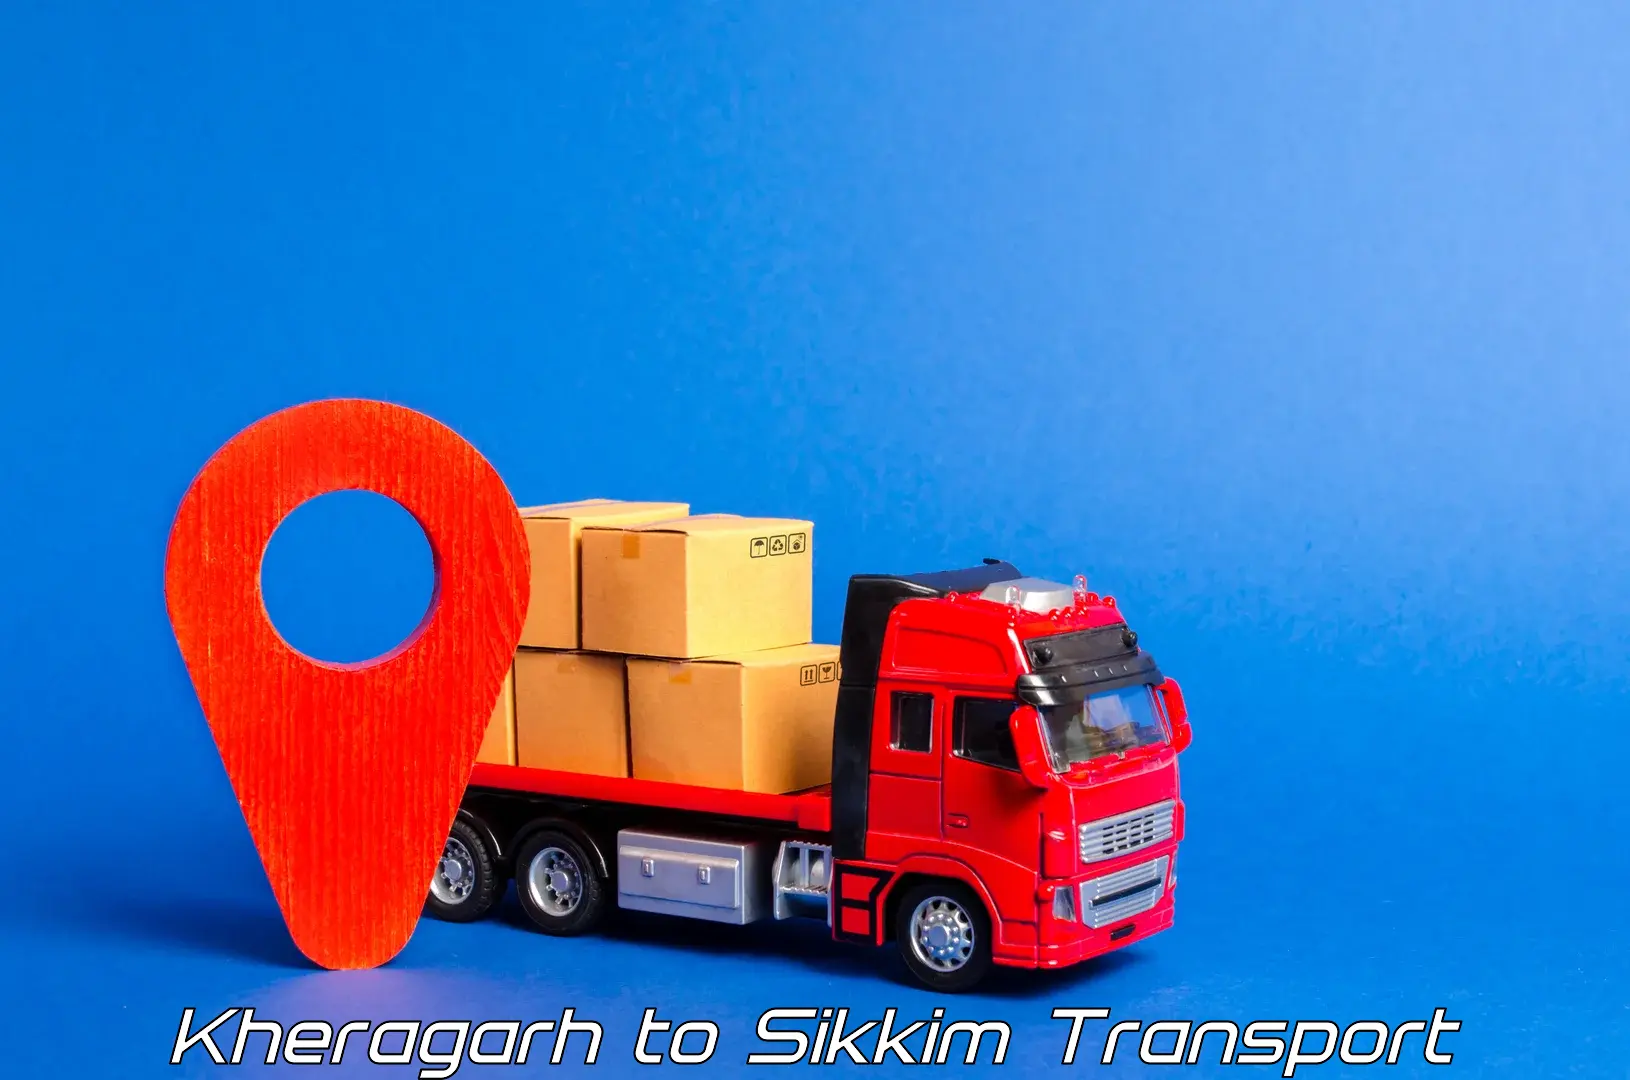 India truck logistics services Kheragarh to Namchi